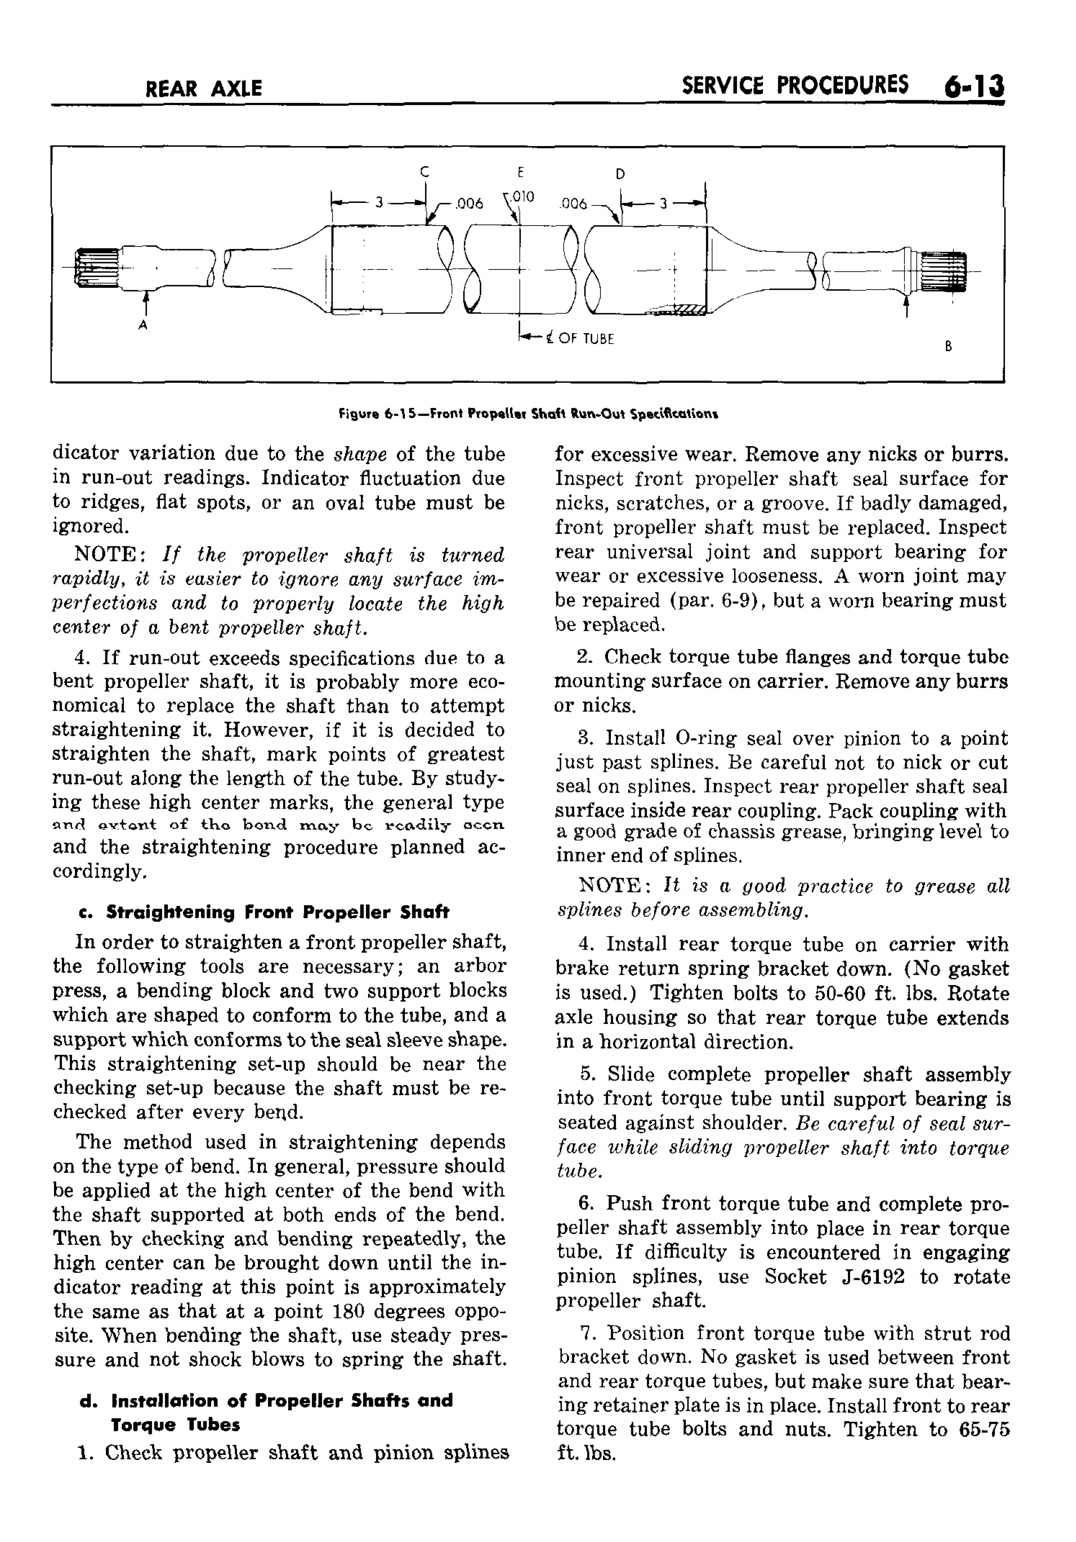 n_07 1959 Buick Shop Manual - Rear Axle-013-013.jpg